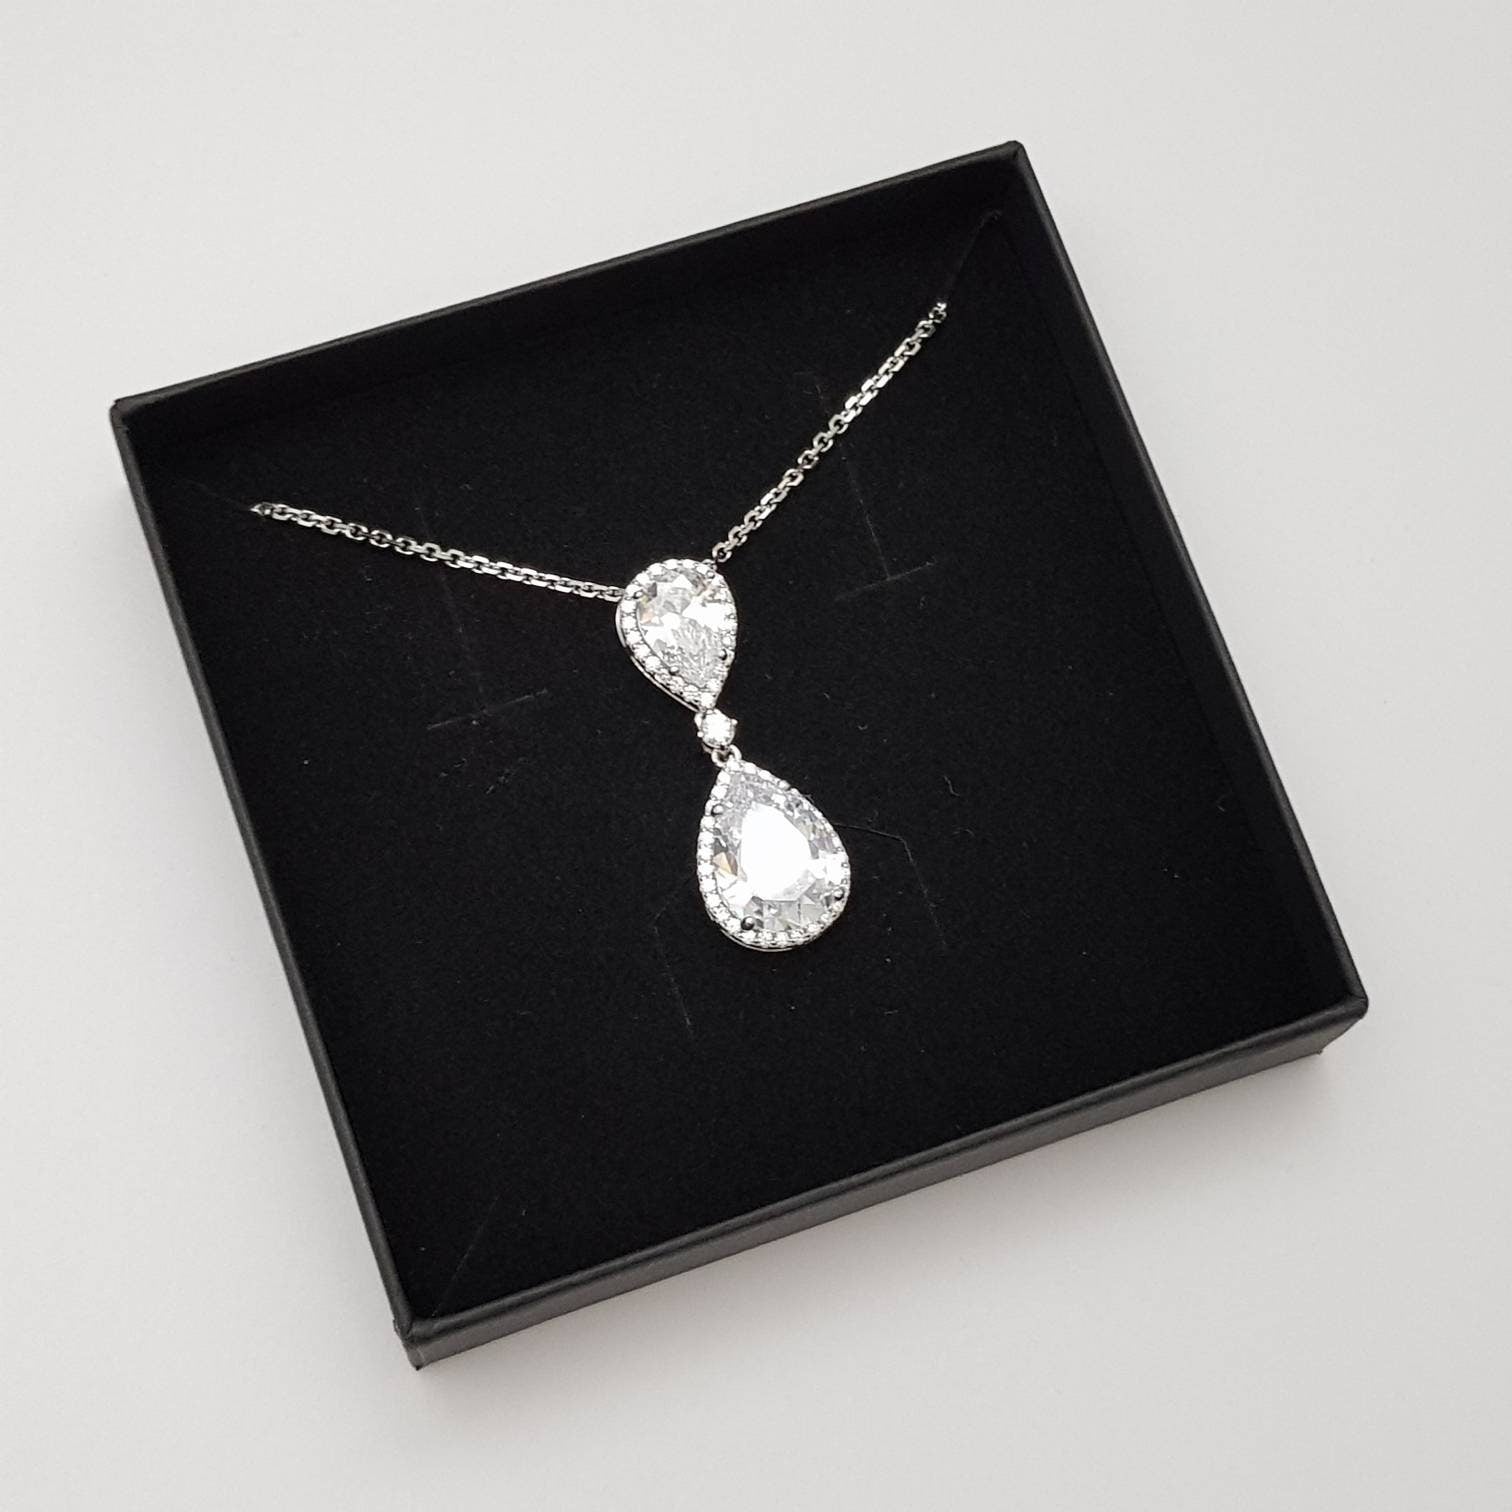 Sterling silver teardrop shaped necklace, vintage style pendant